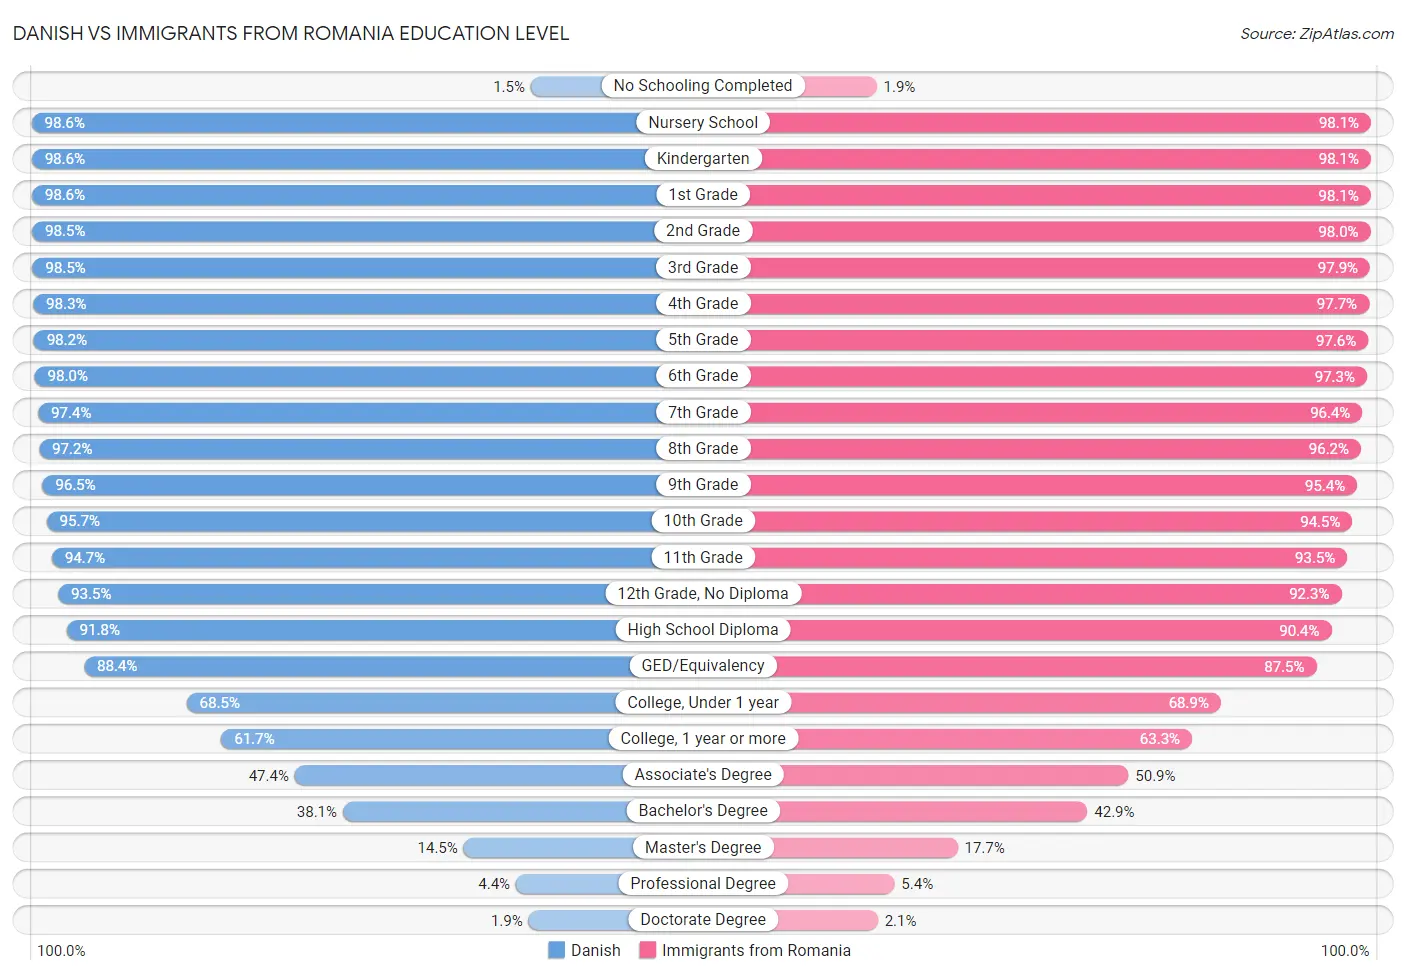 Danish vs Immigrants from Romania Education Level